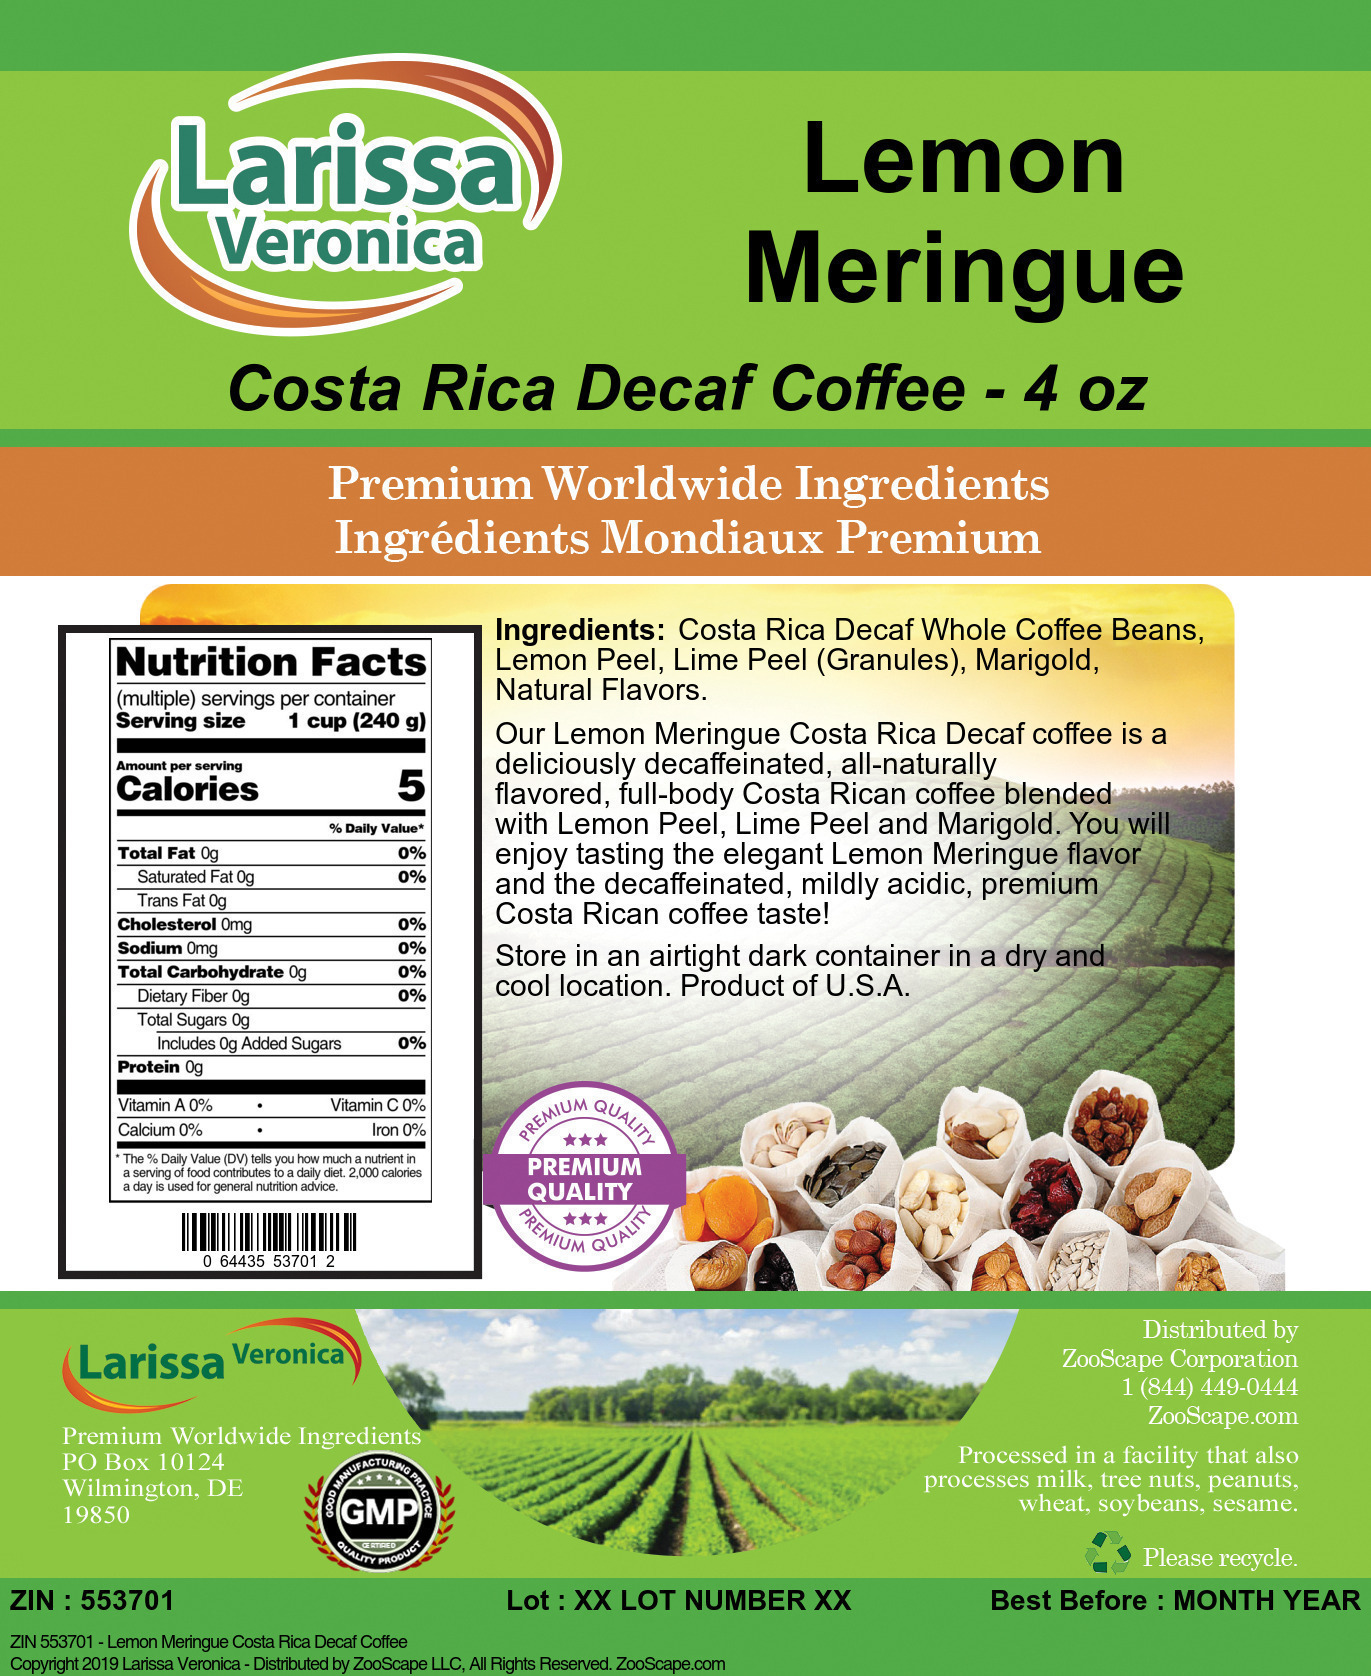 Lemon Meringue Costa Rica Decaf Coffee - Label